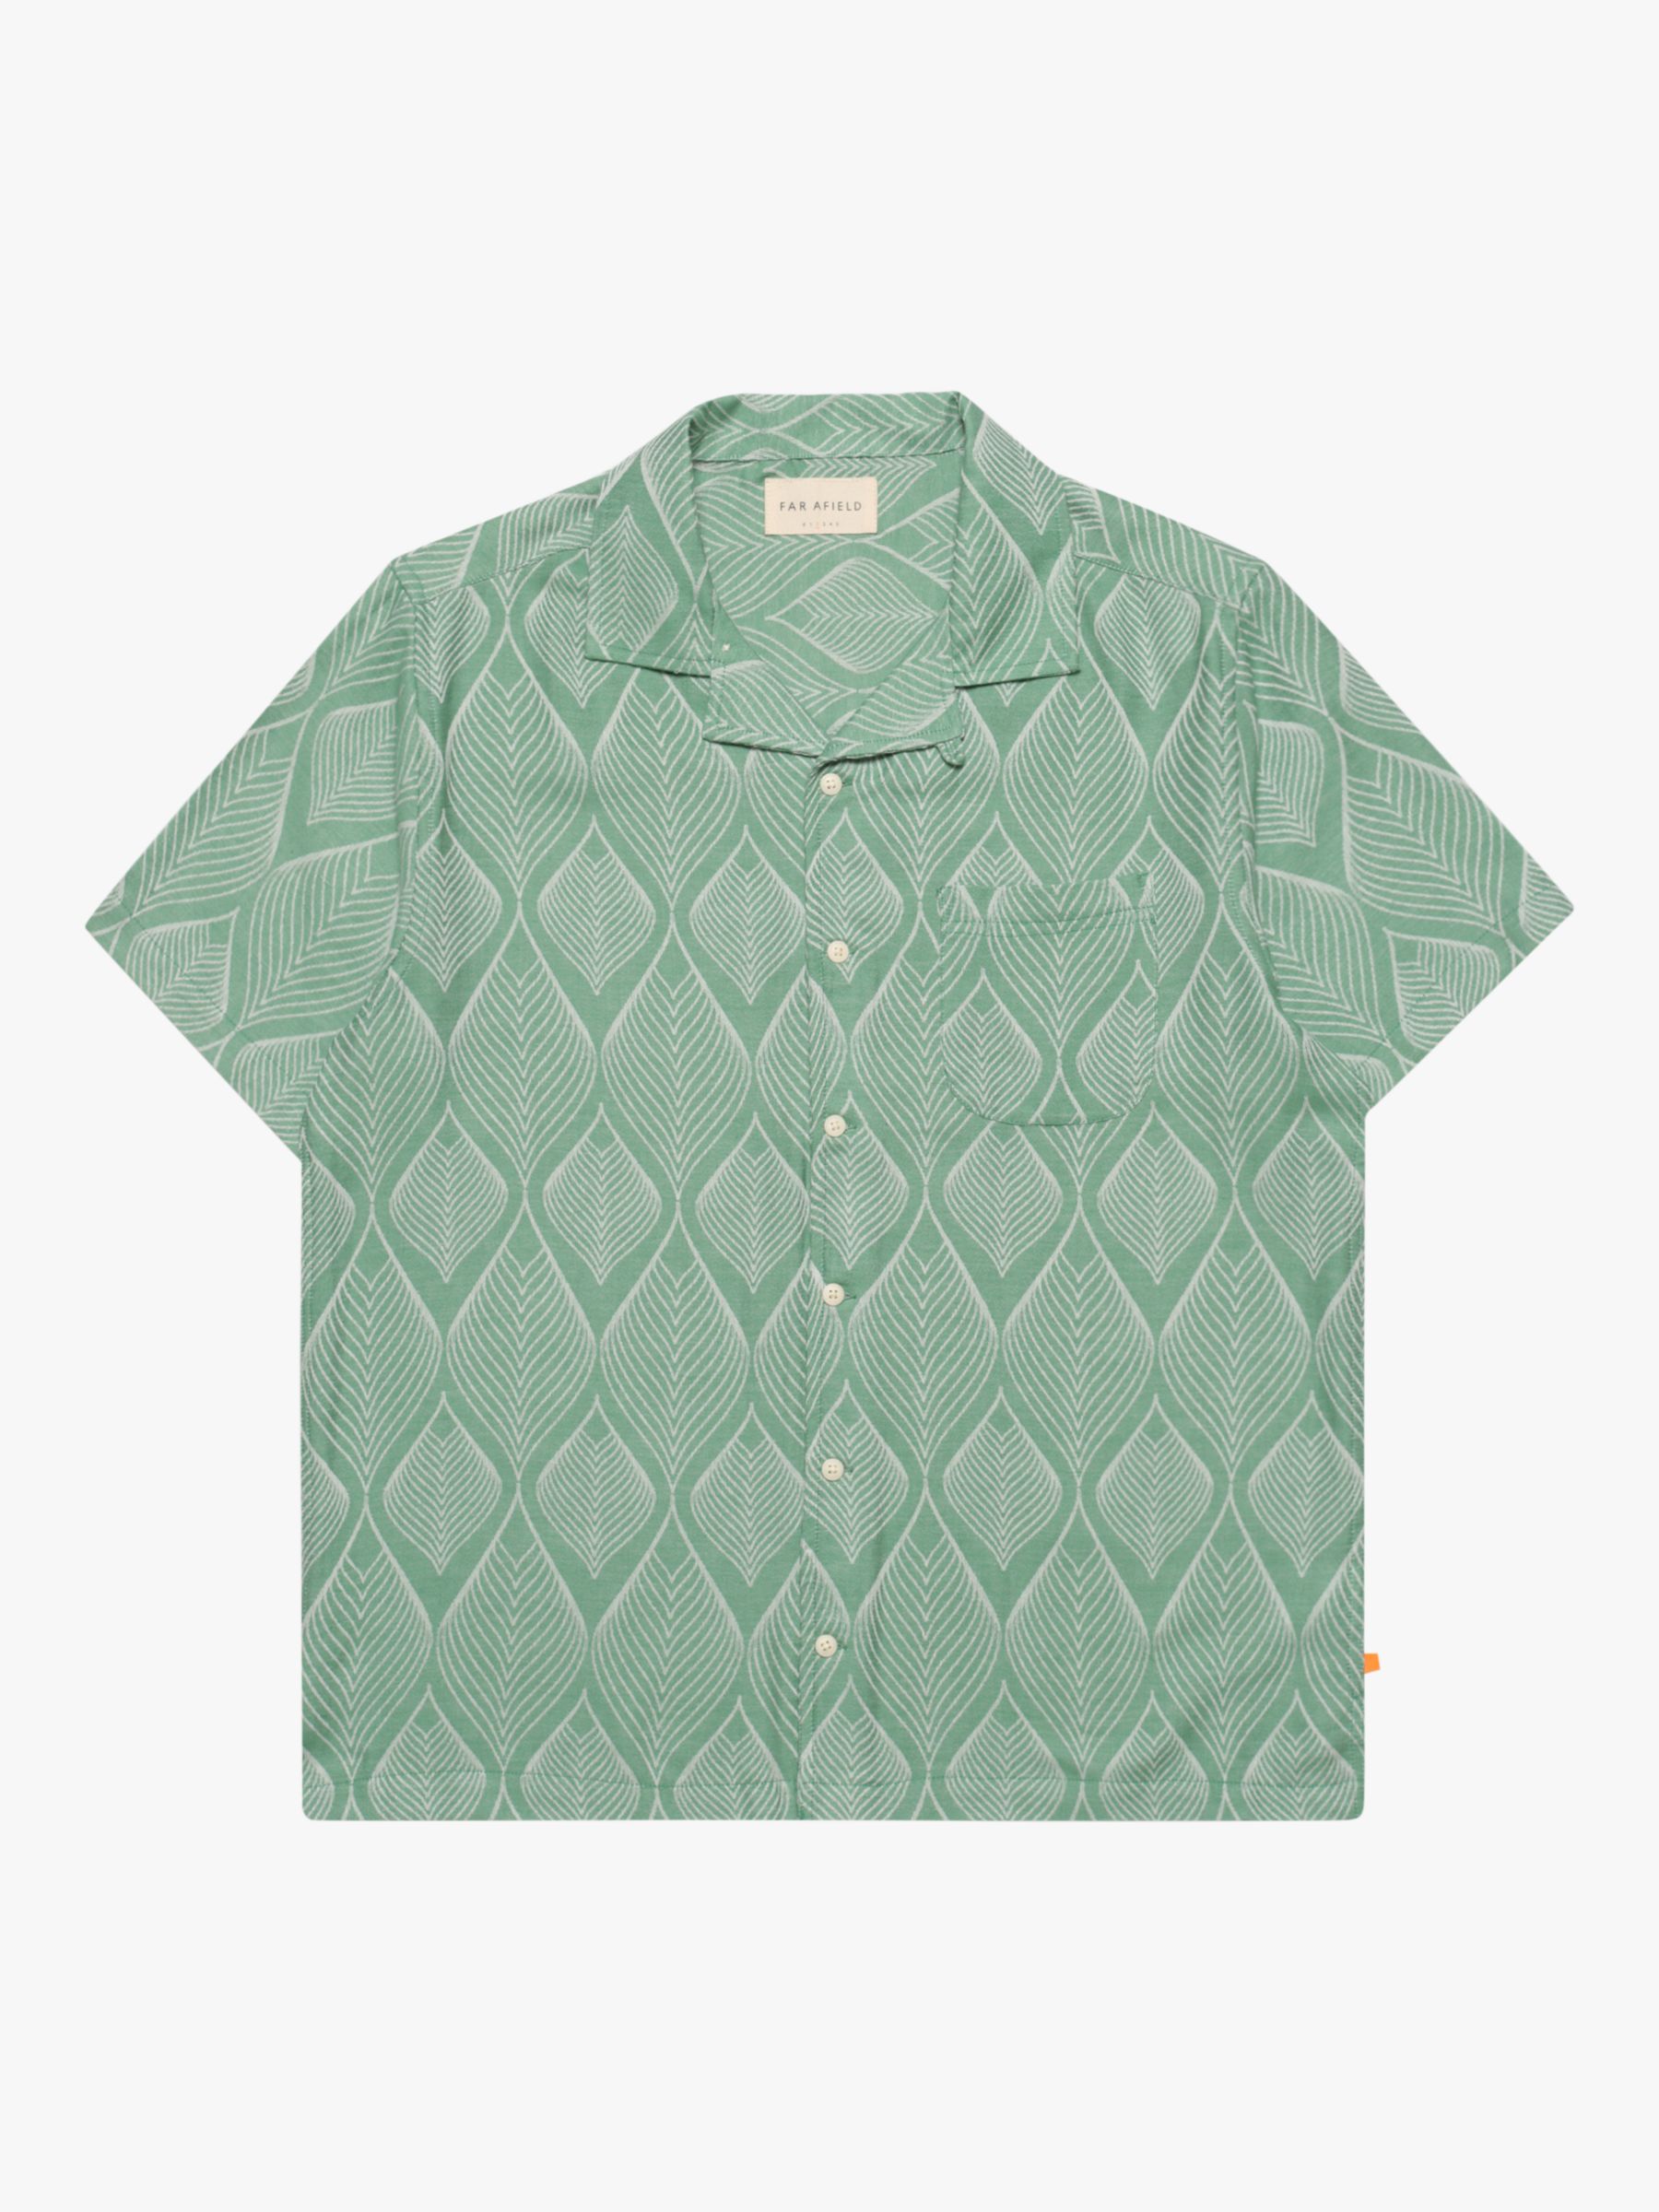 Far Afield Stachio Short Sleeve Shirt, Green, S